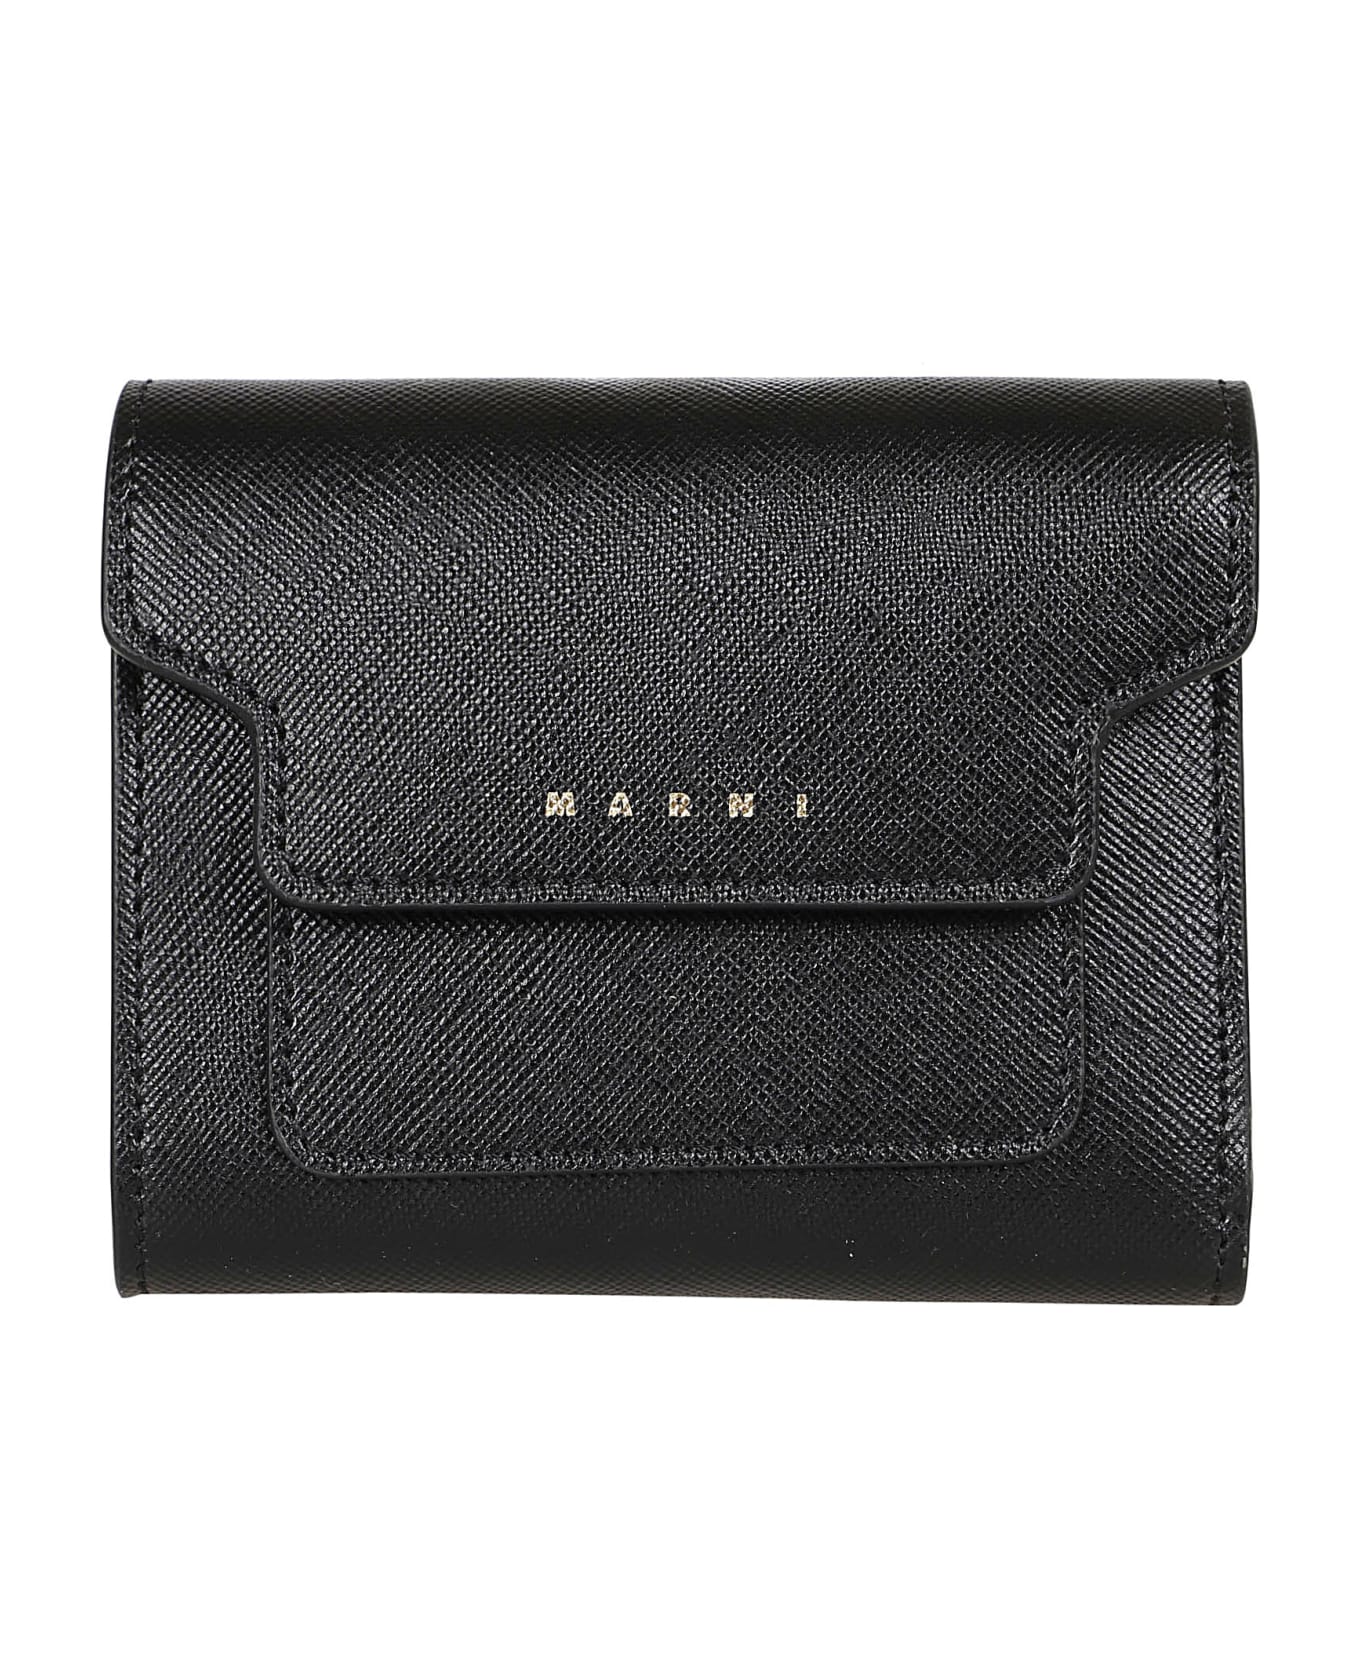 Marni Wallet Flap Squared - N Black 財布